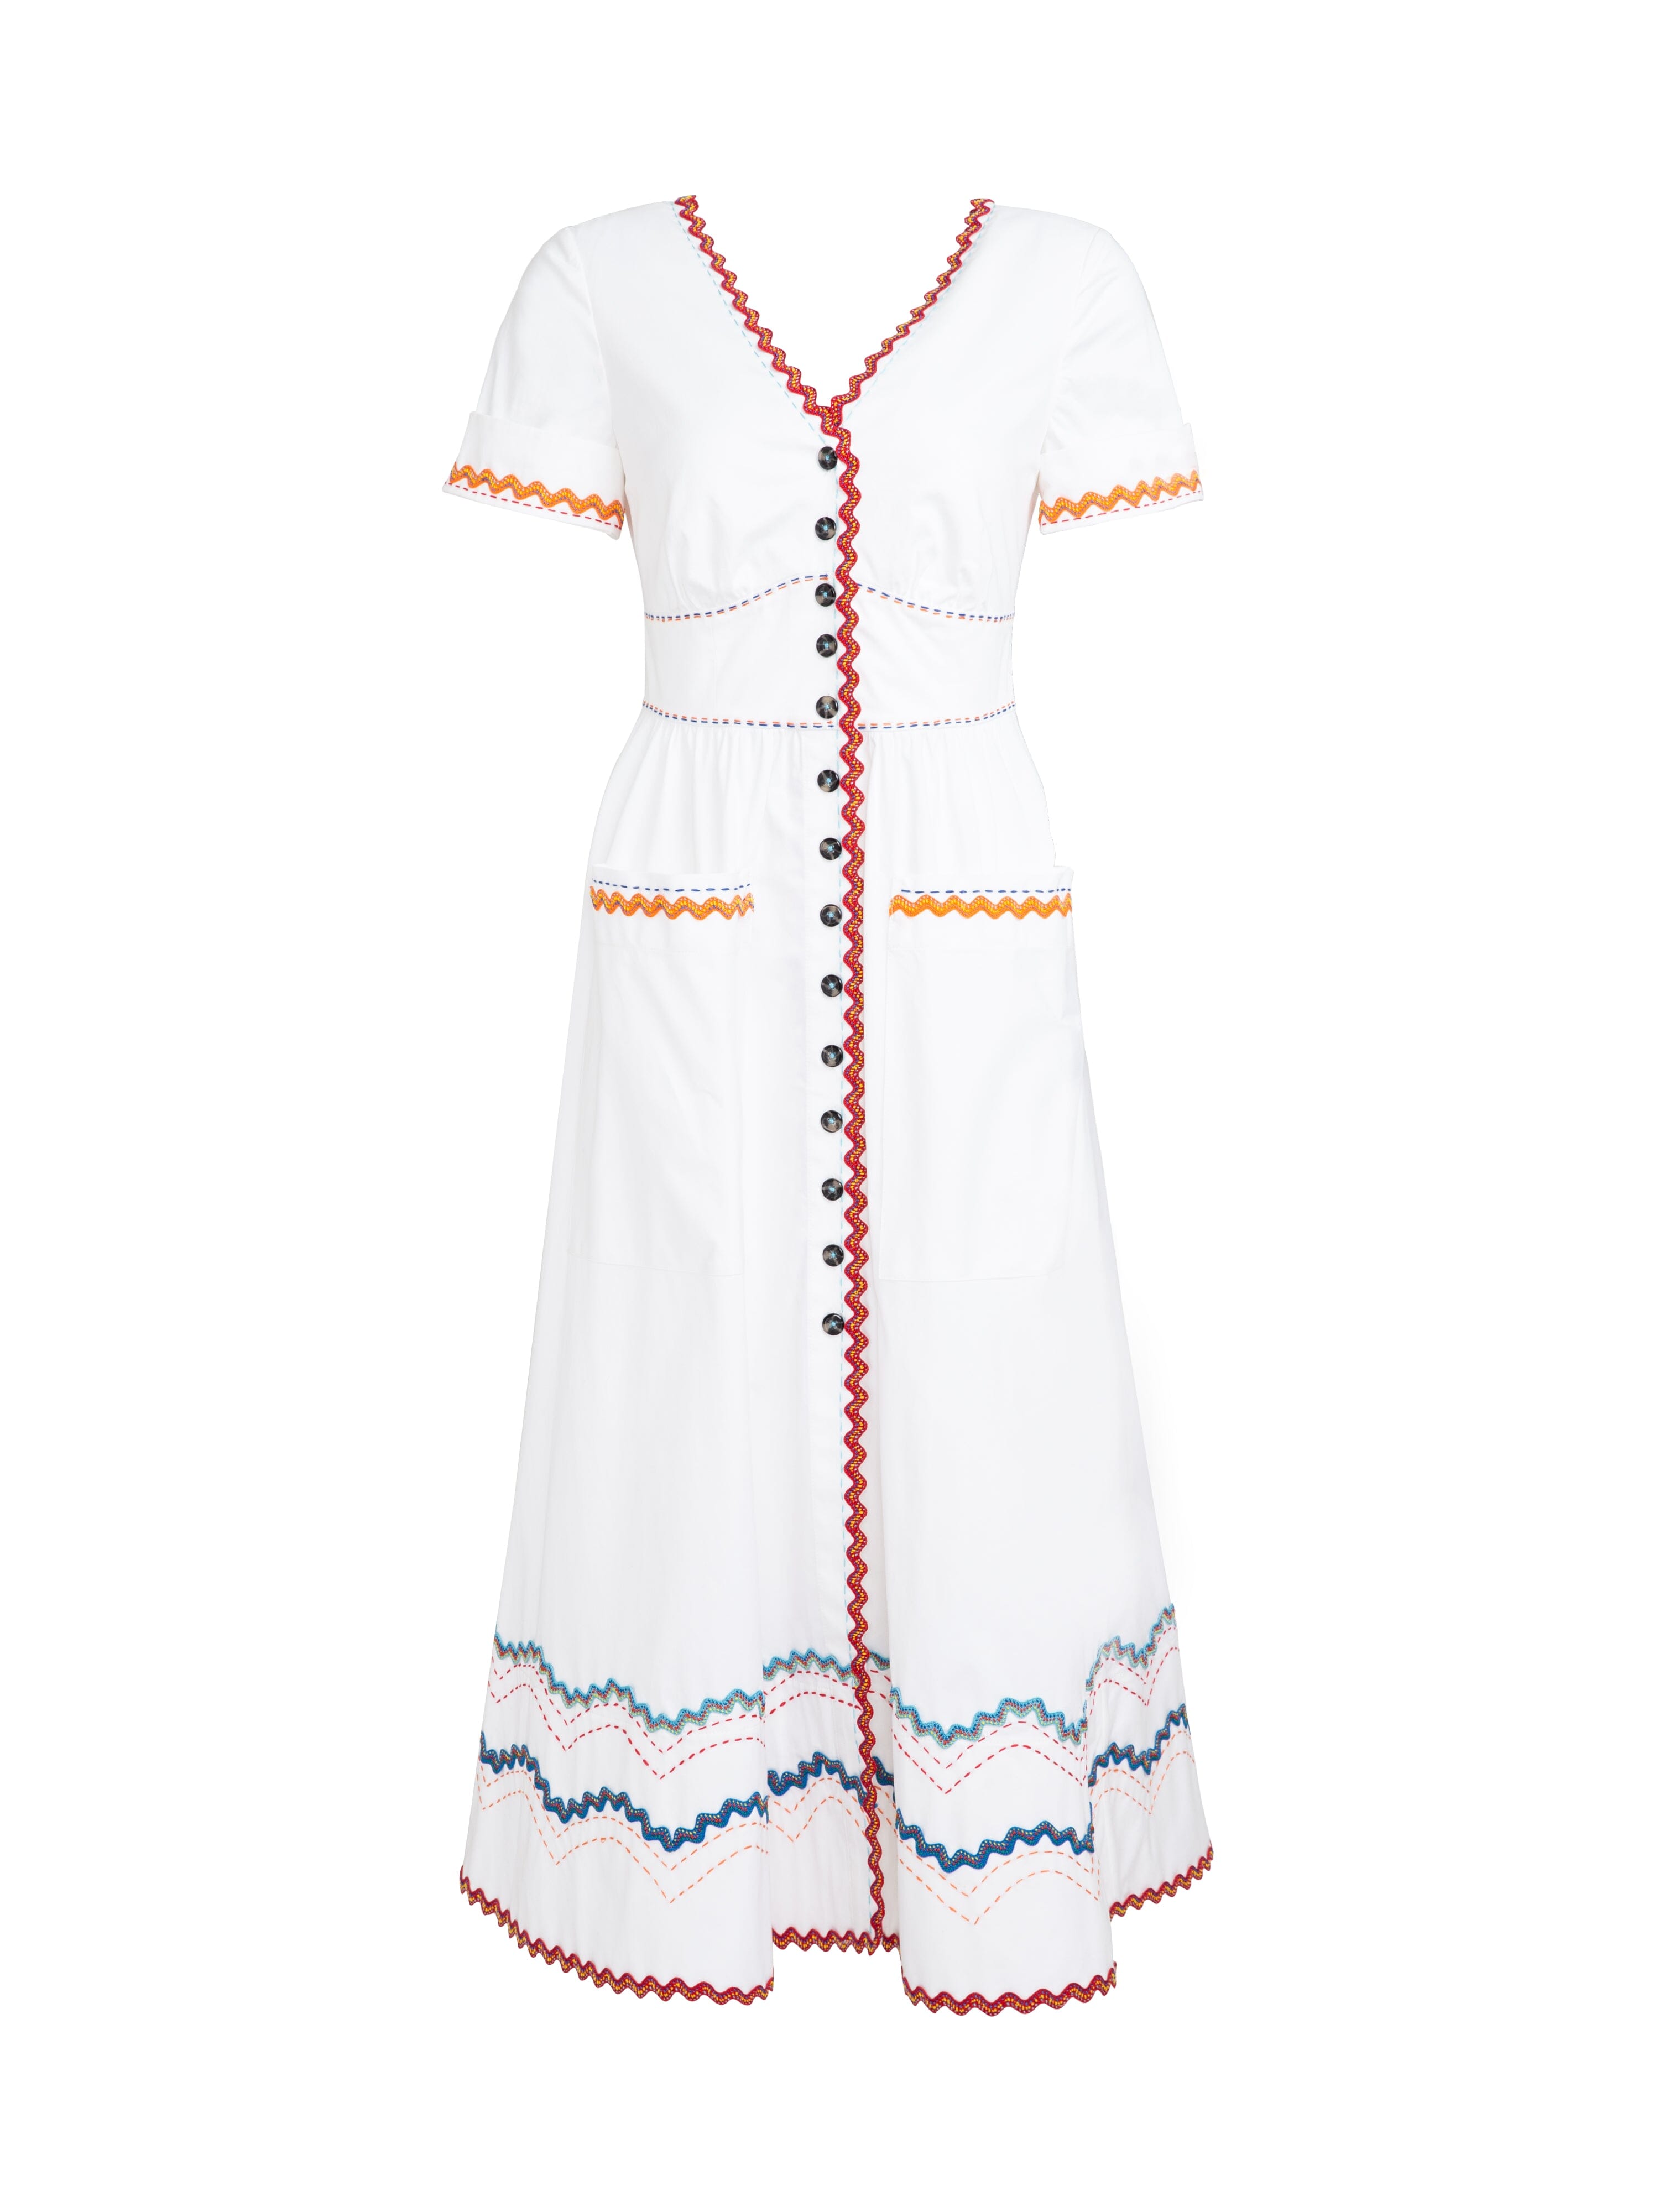 Luella C Dress in White Ricrac Stitch